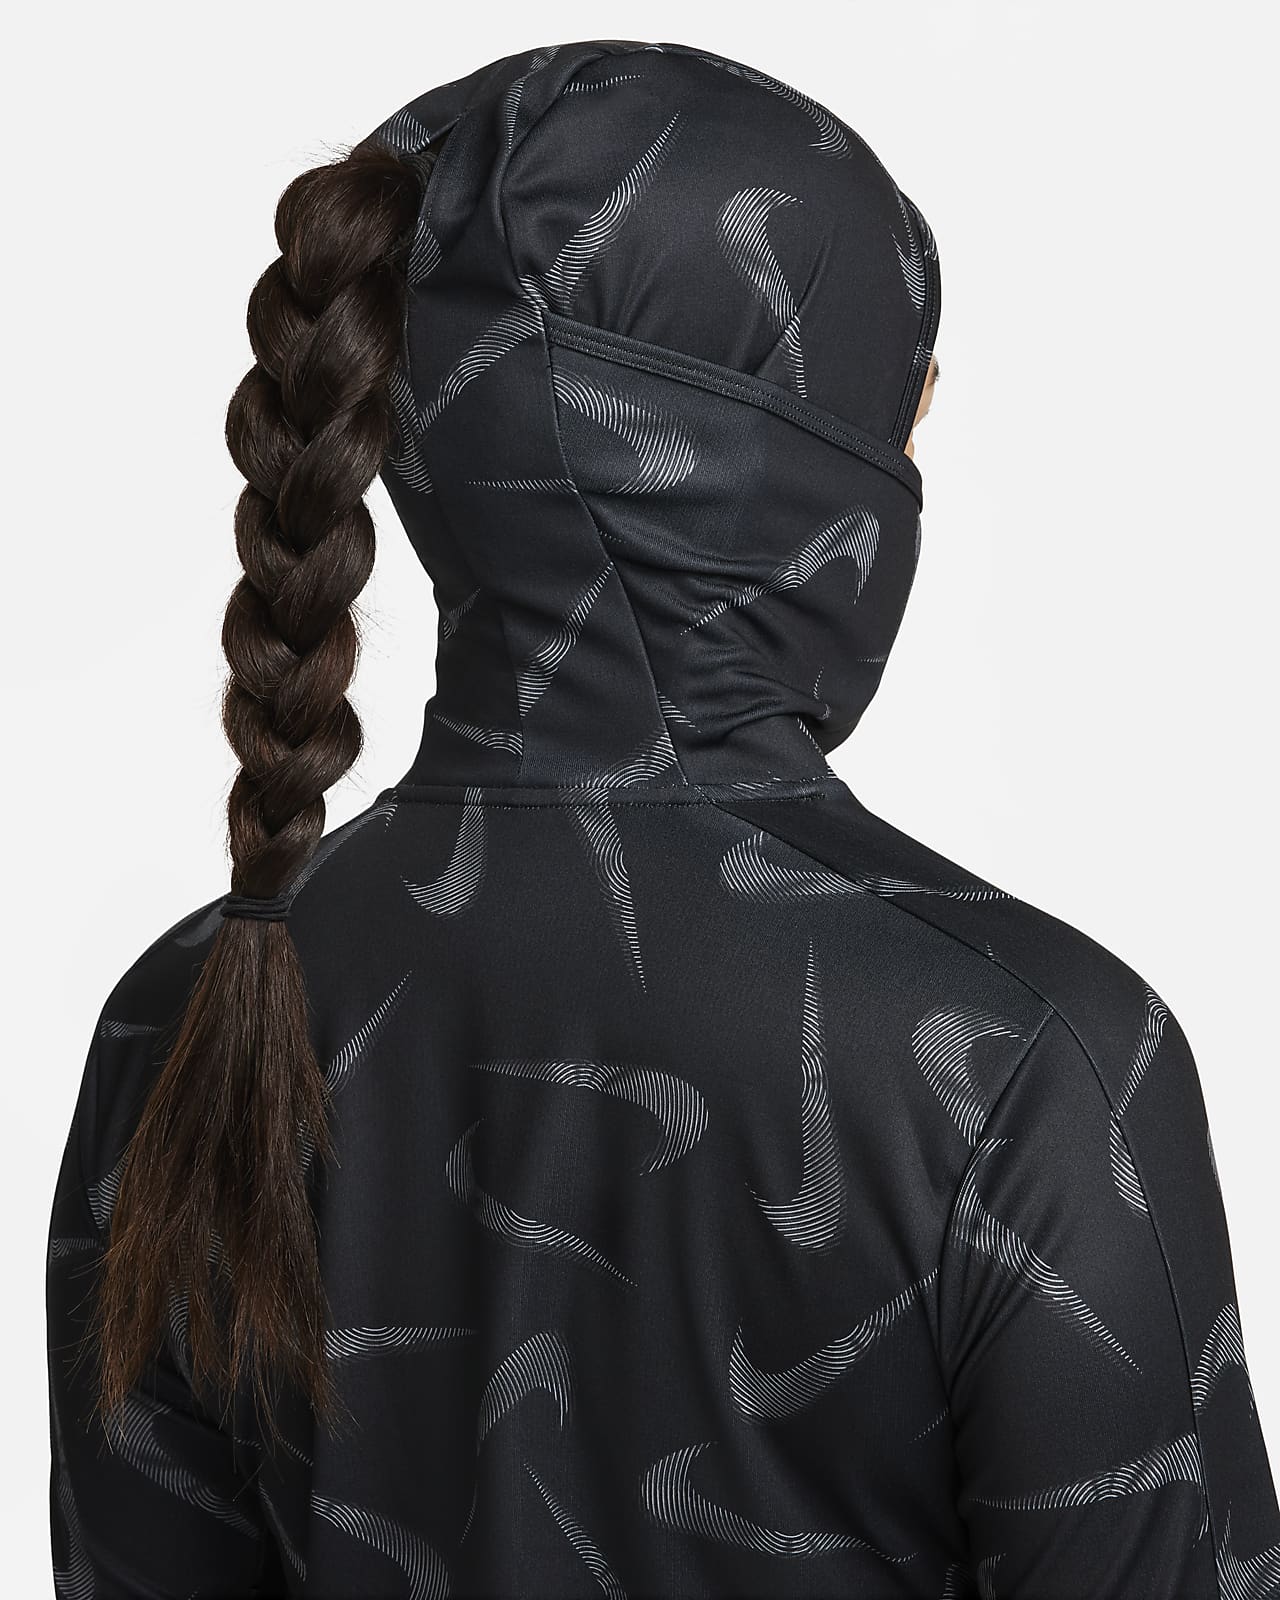 Nike Swoosh Women's Hooded Printed Running Jacket. Nike LU